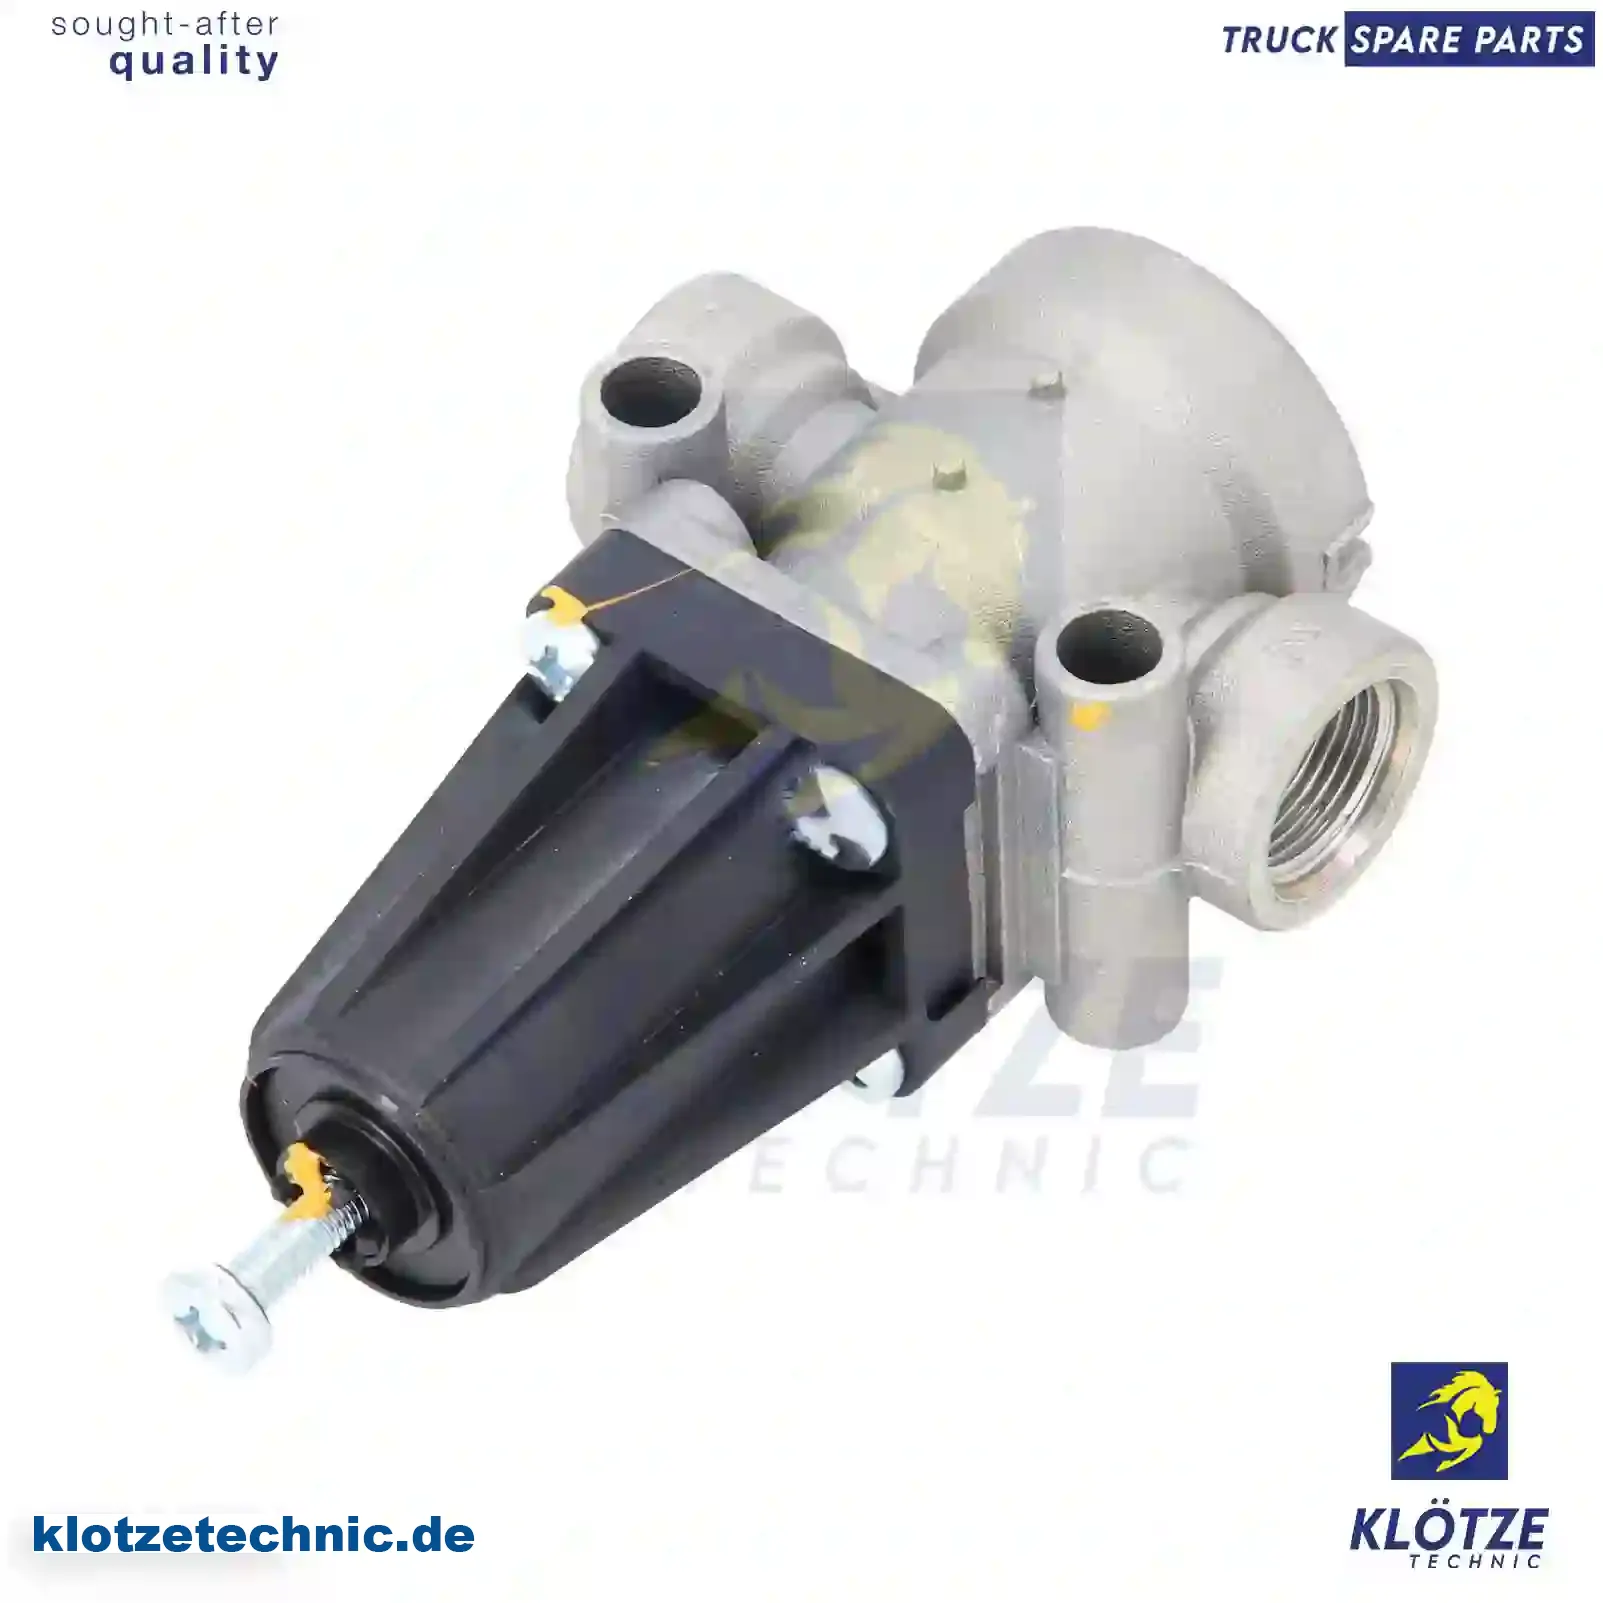 Pressure limiting valve, 81521016295, 2V5607337, , || Klötze Technic